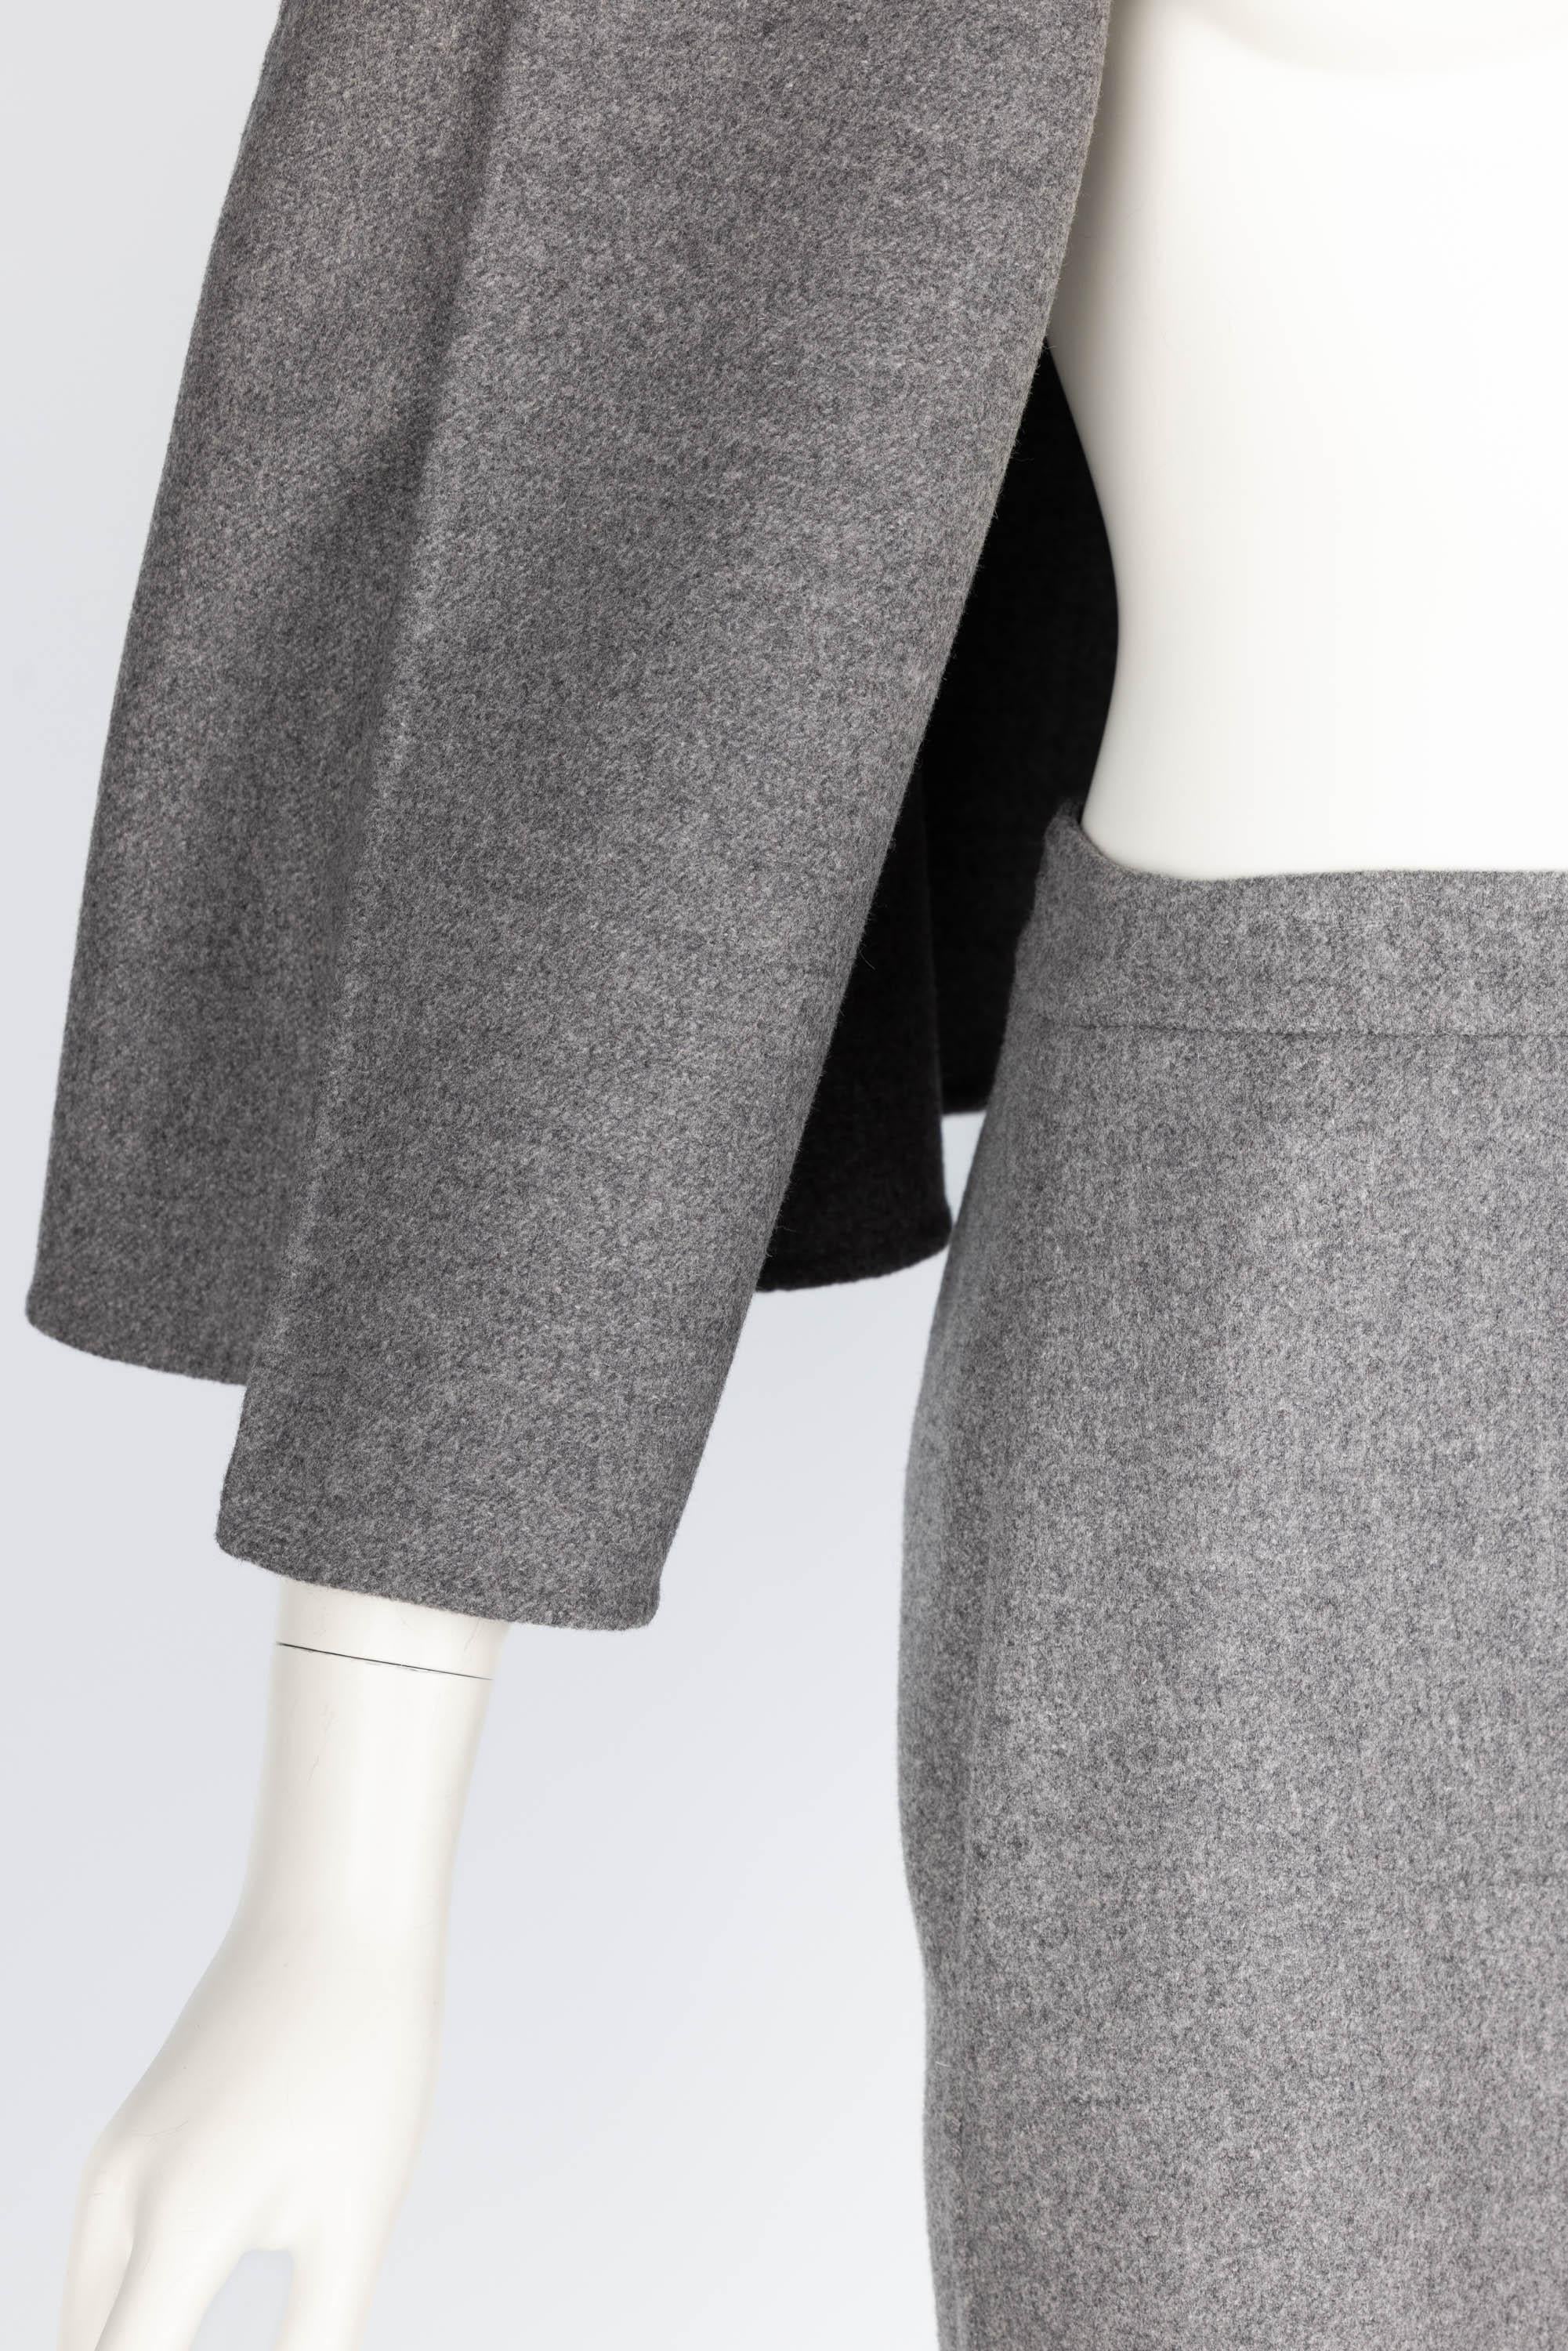 Valentino Grey Wool Angora Cape Mini Skirt Suit Set For Sale 5